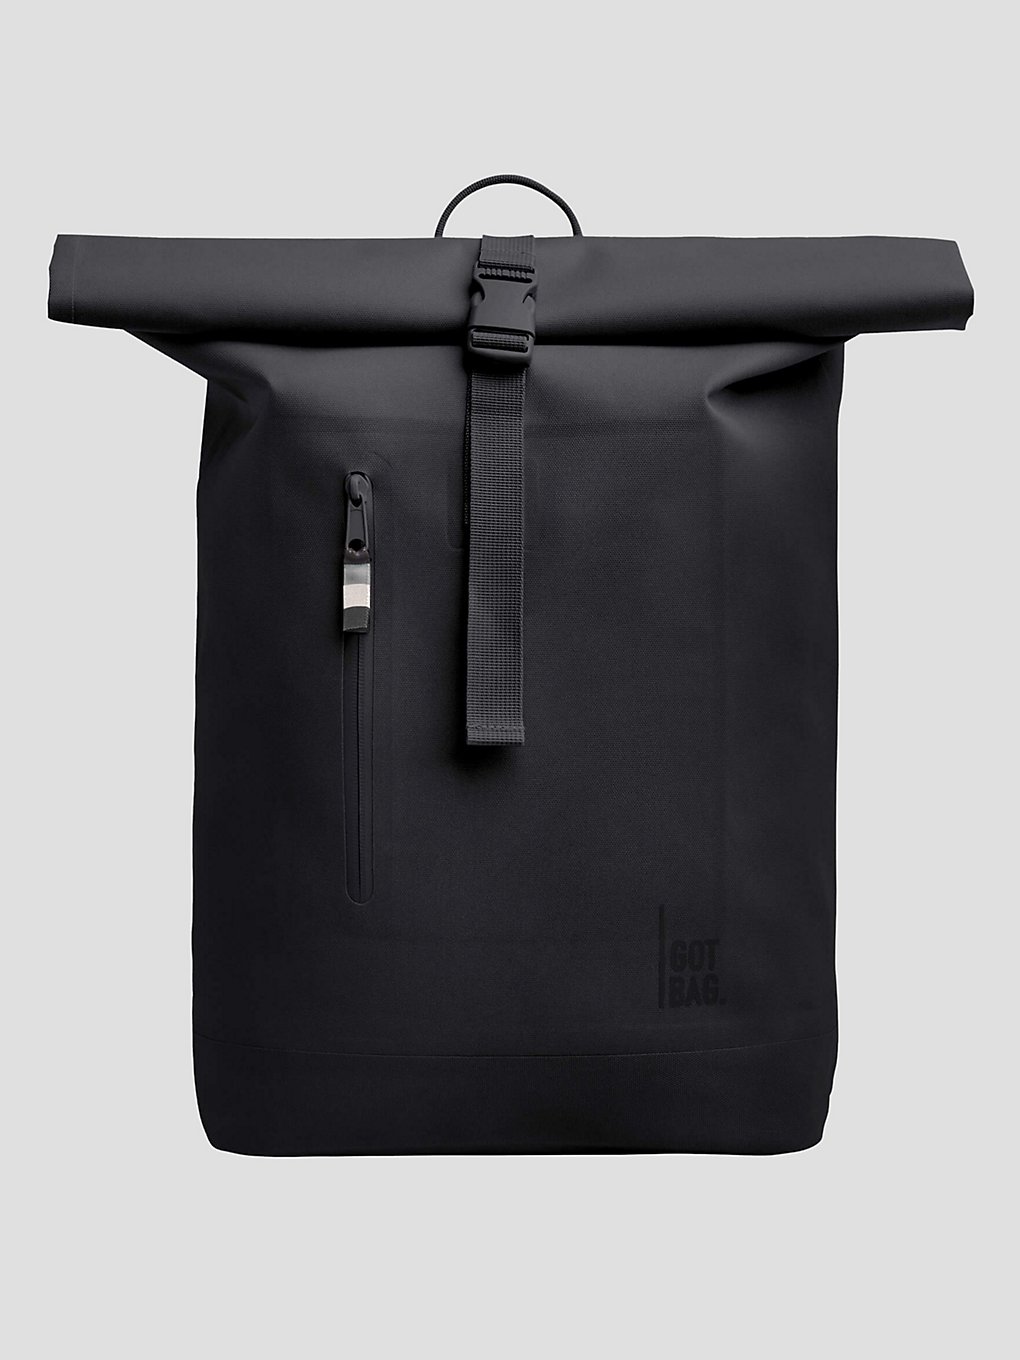 Got Bag Lite Monochrom Backpack black kaufen